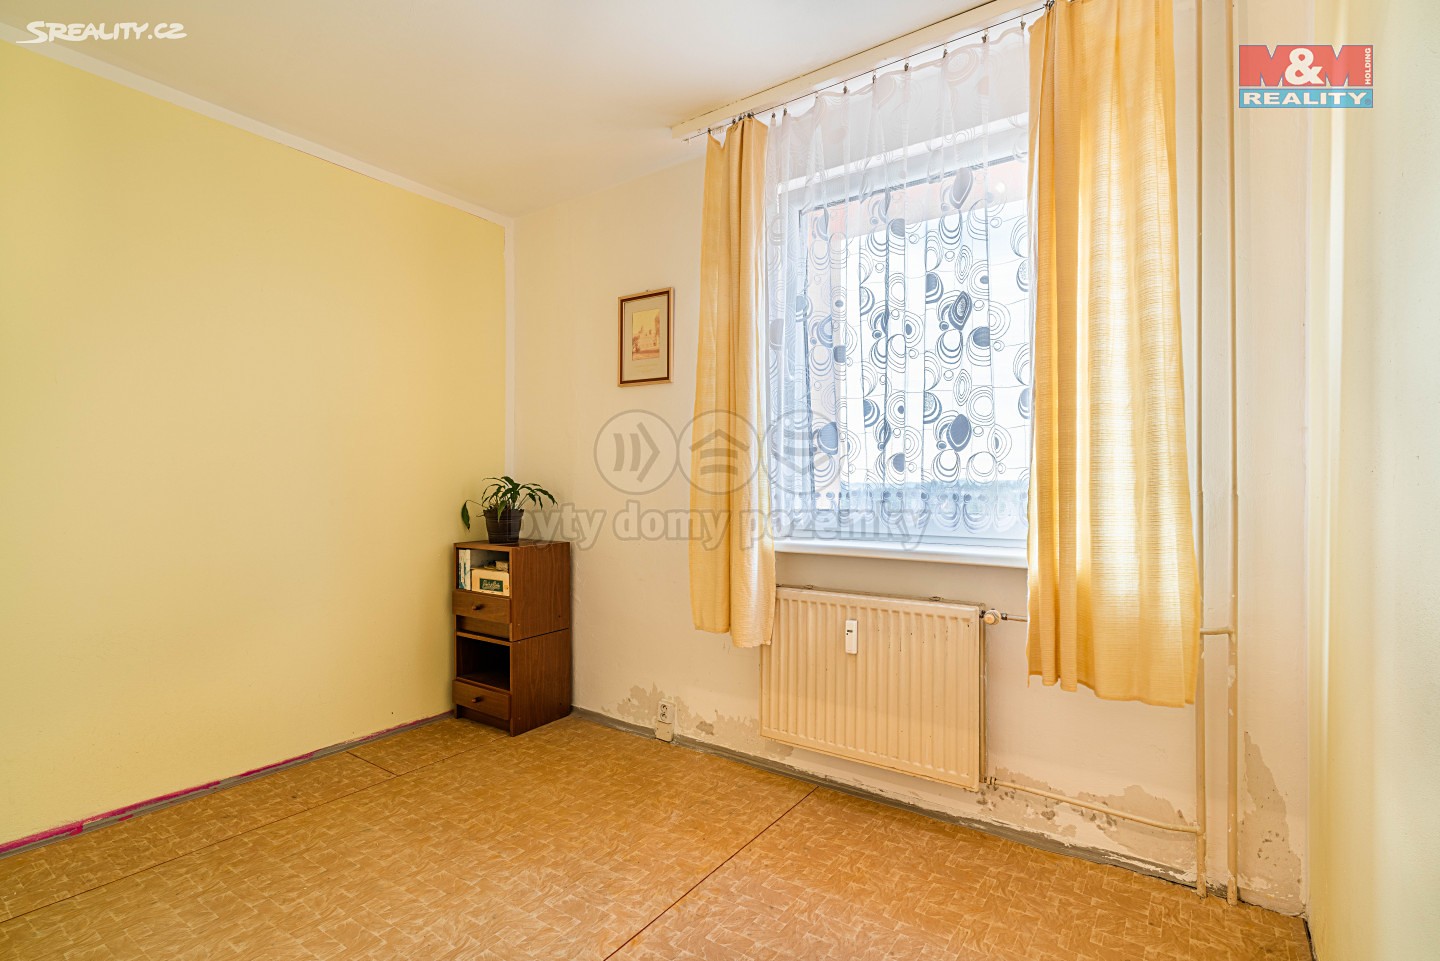 Prodej bytu 3+1 62 m², Pazderkova, Liberec - Liberec VI-Rochlice